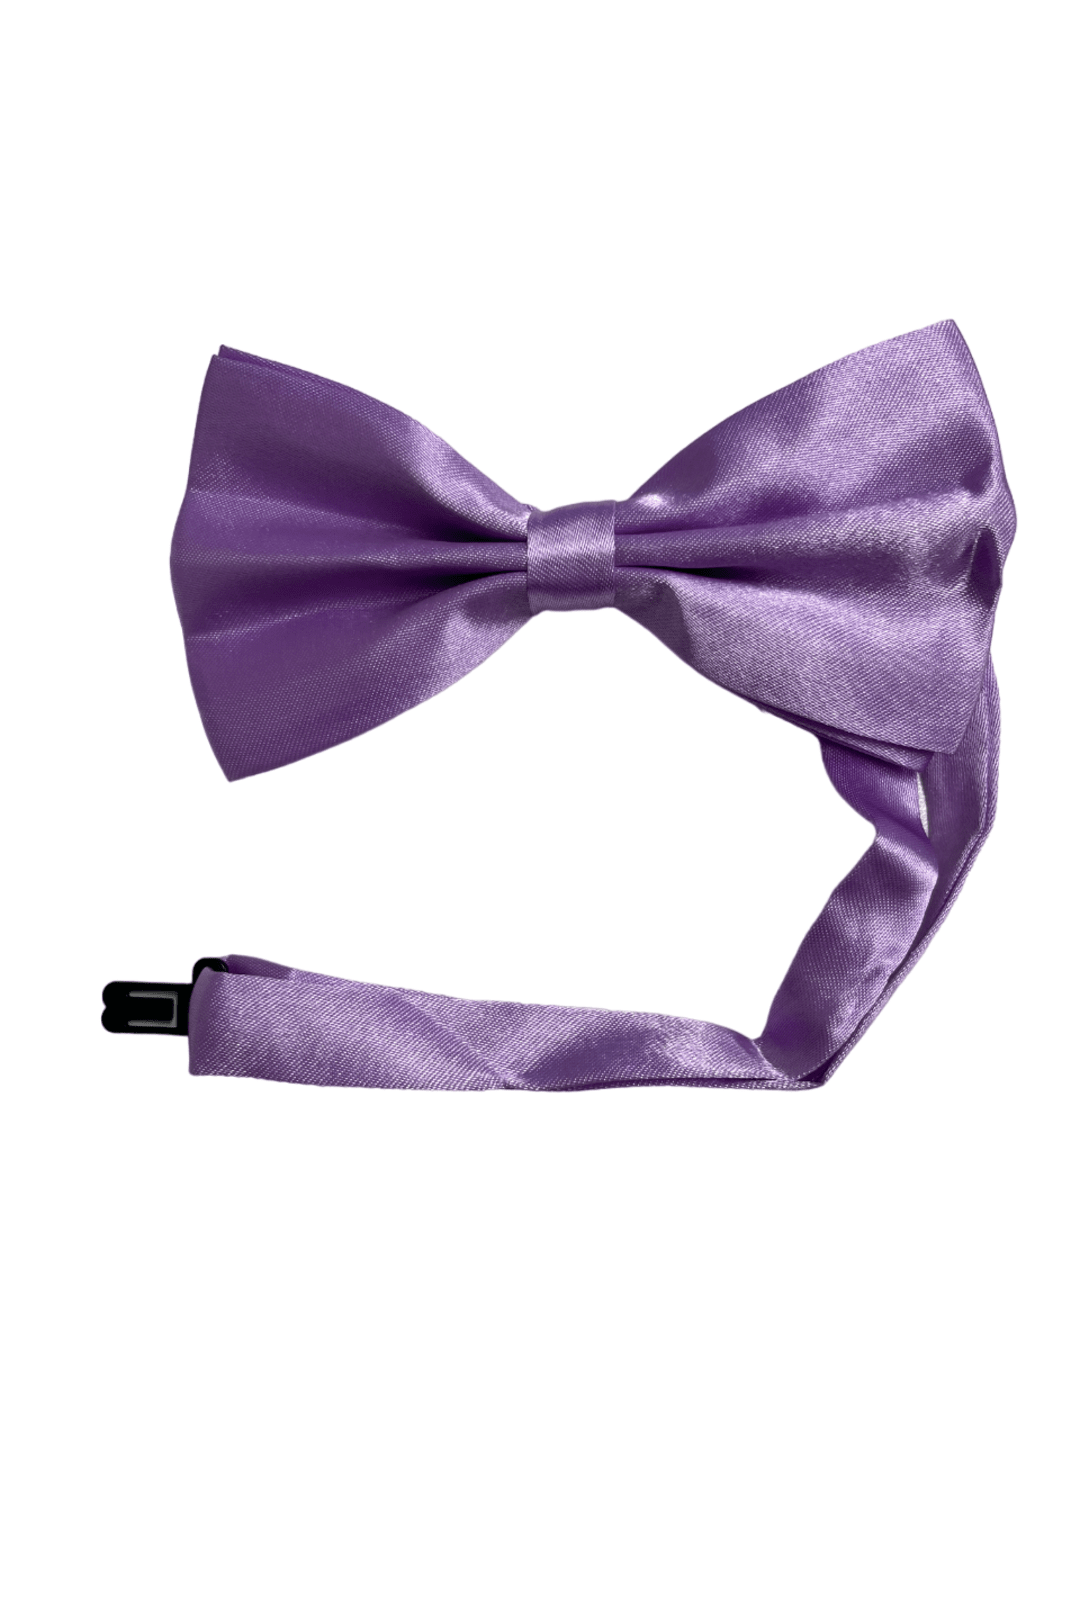 Soft Purple Satin Pre-Tied Bow Tie